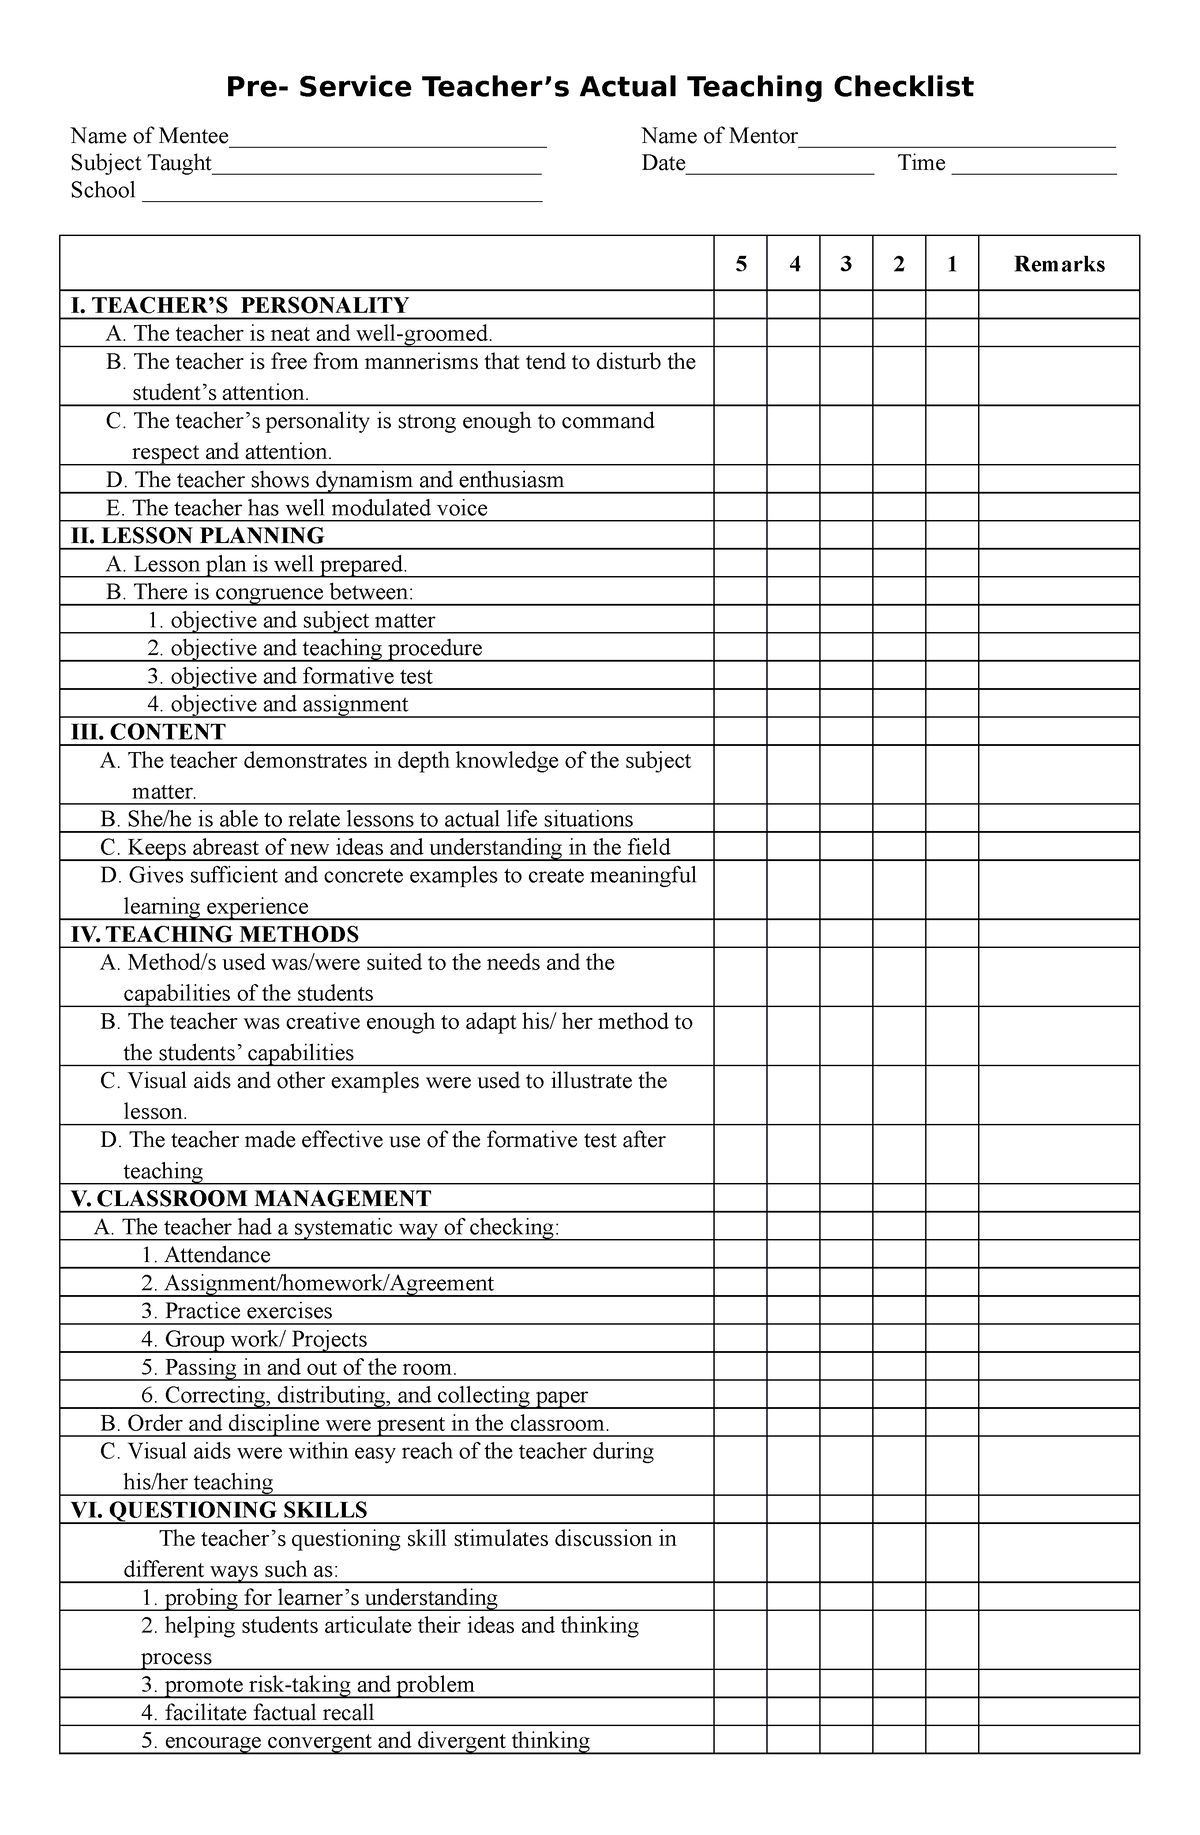 Pre-service-teacher-actual-teaching-checklist compress - Pre- Service ...